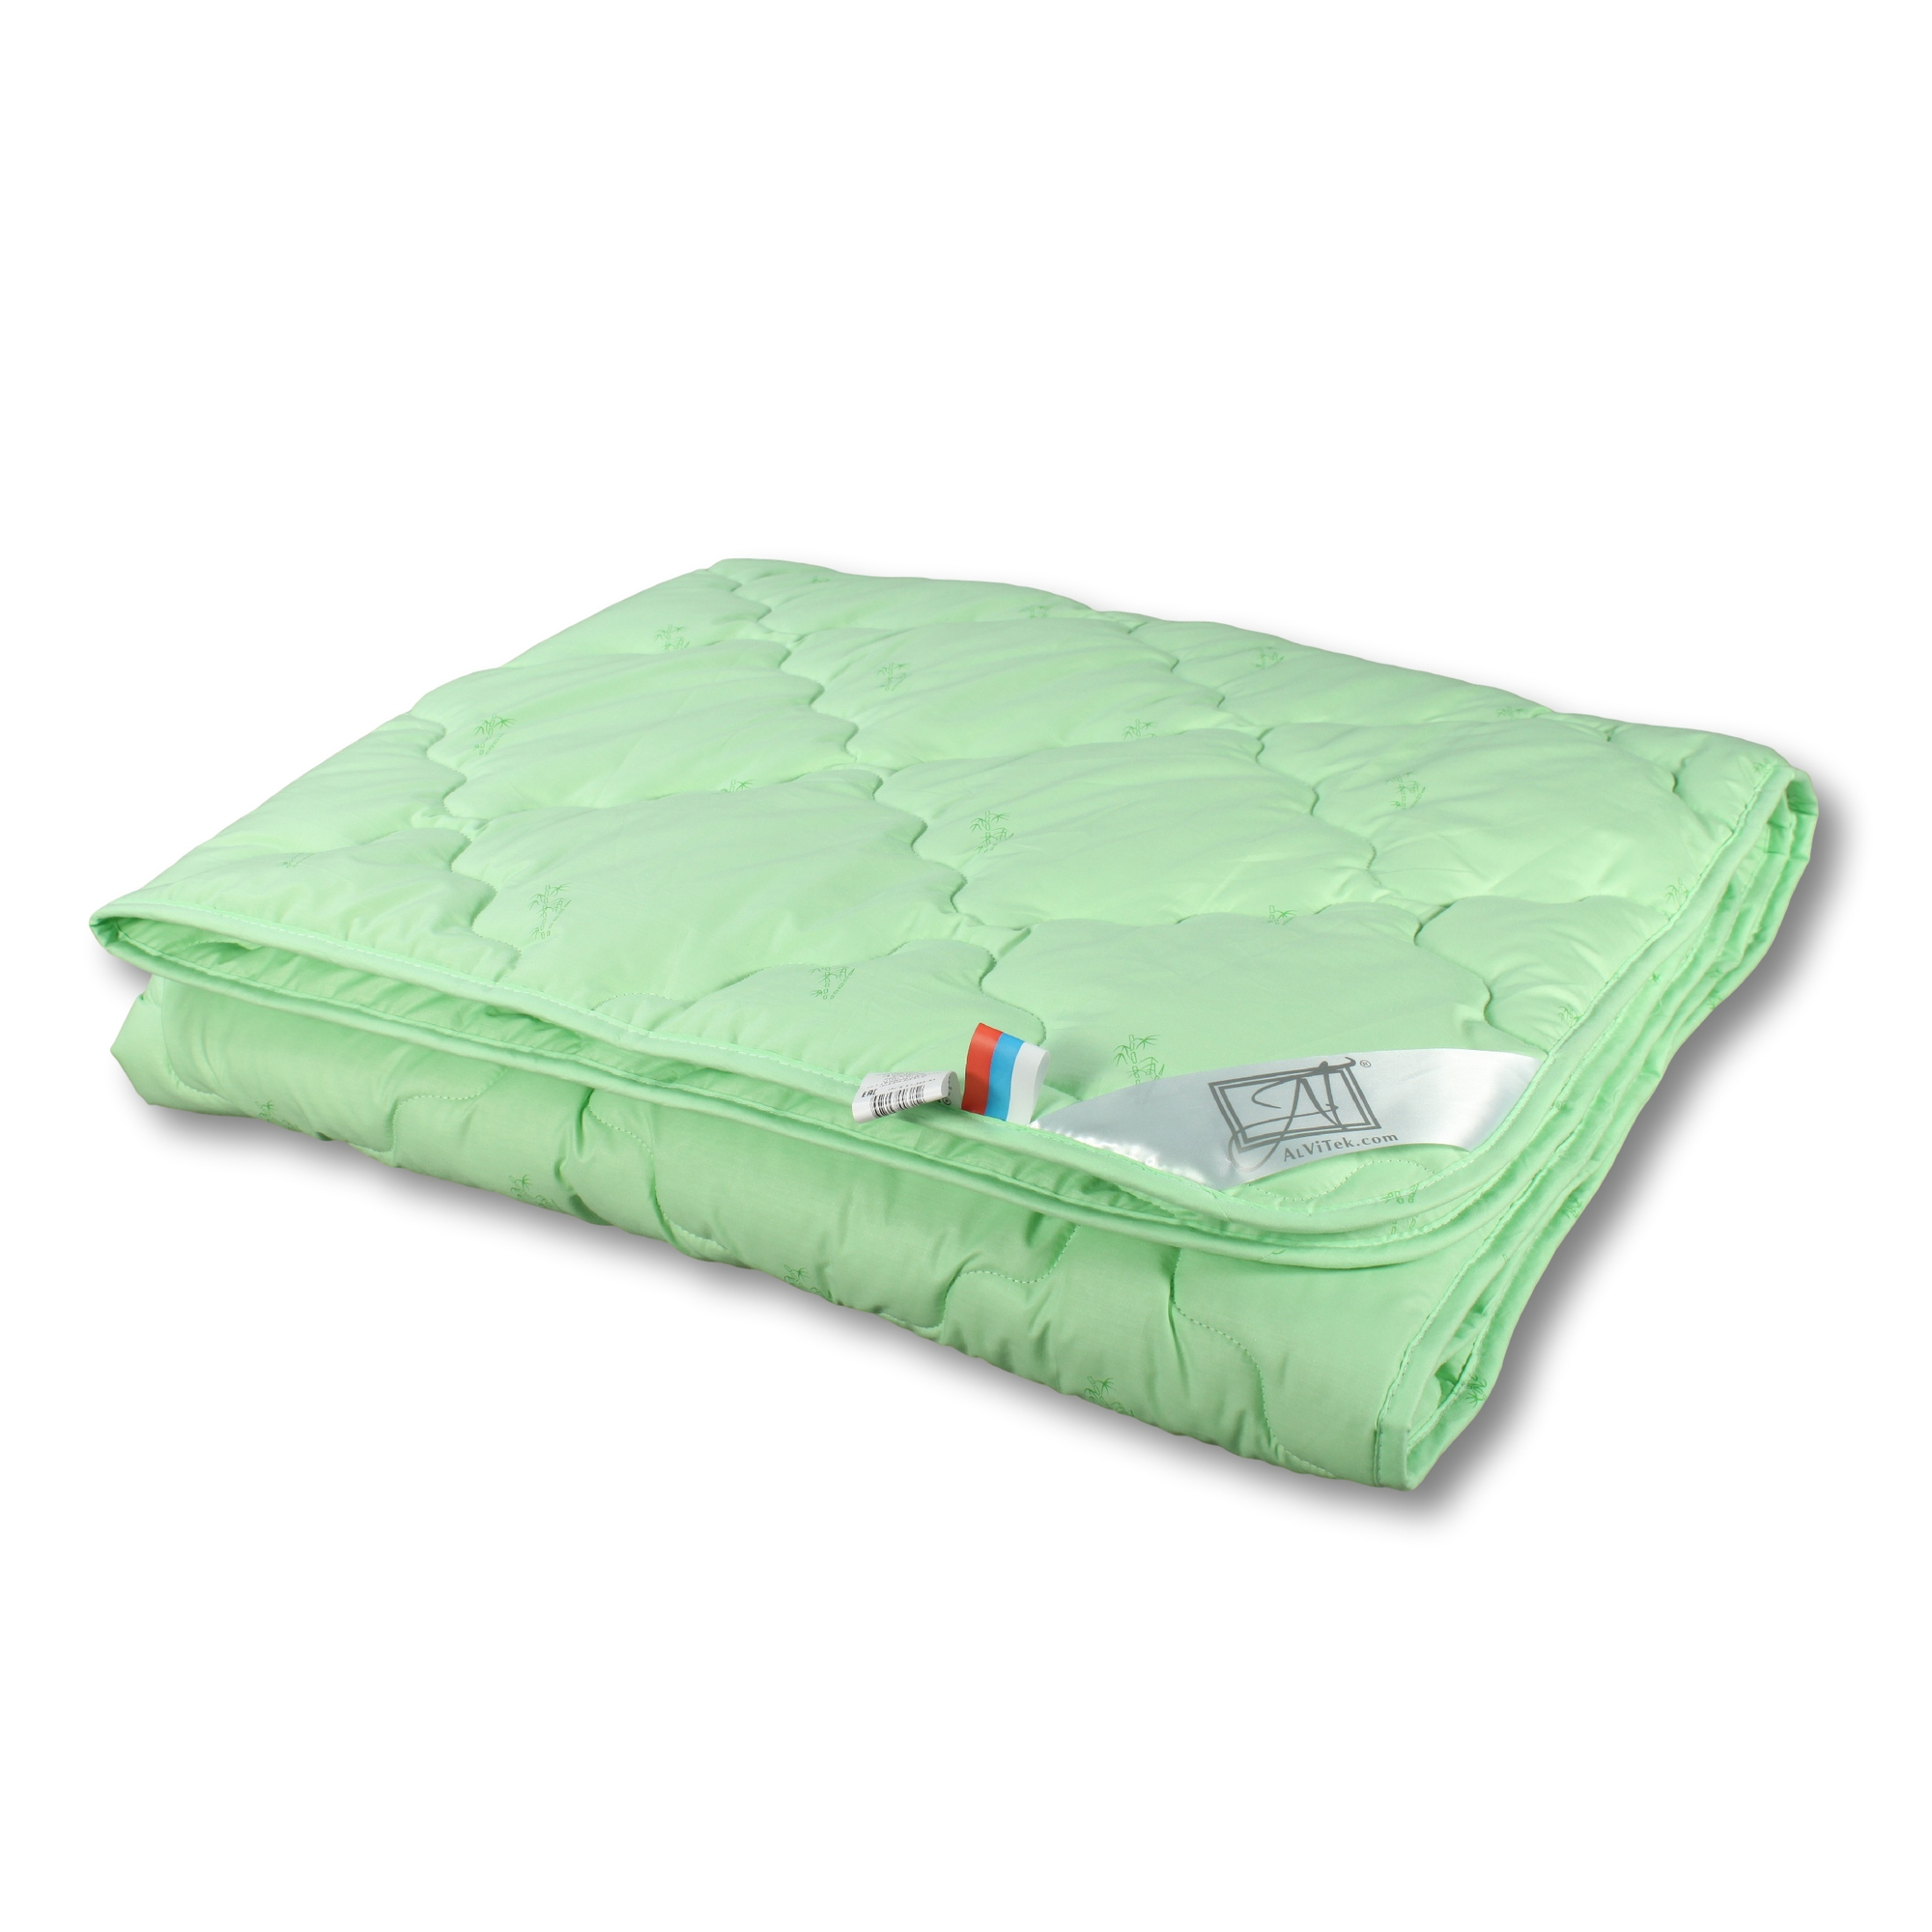 Одеяло Deanna Всесезонное (172х205 см), размер 172х205 см, цвет зеленый avt131572 Одеяло Deanna Всесезонное (172х205 см) - фото 1